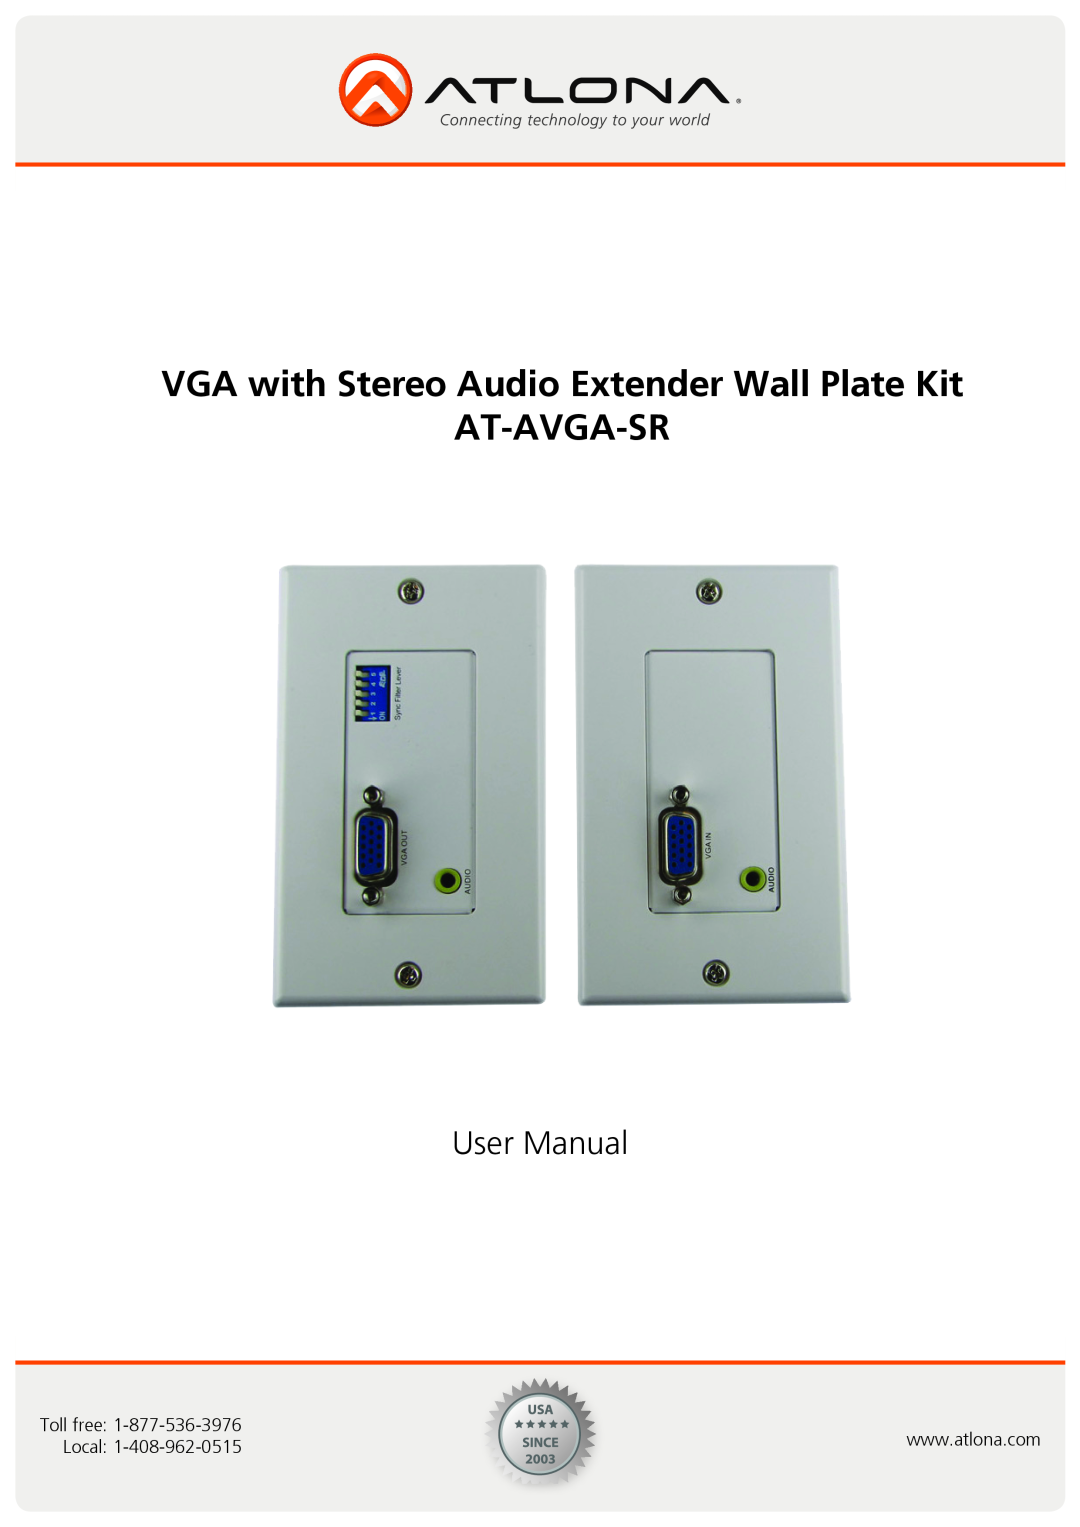 Atlona user manual VGA with Stereo Audio Extender Wall Plate Kit AT-AVGA-SR, User Manual, Toll free, Local 